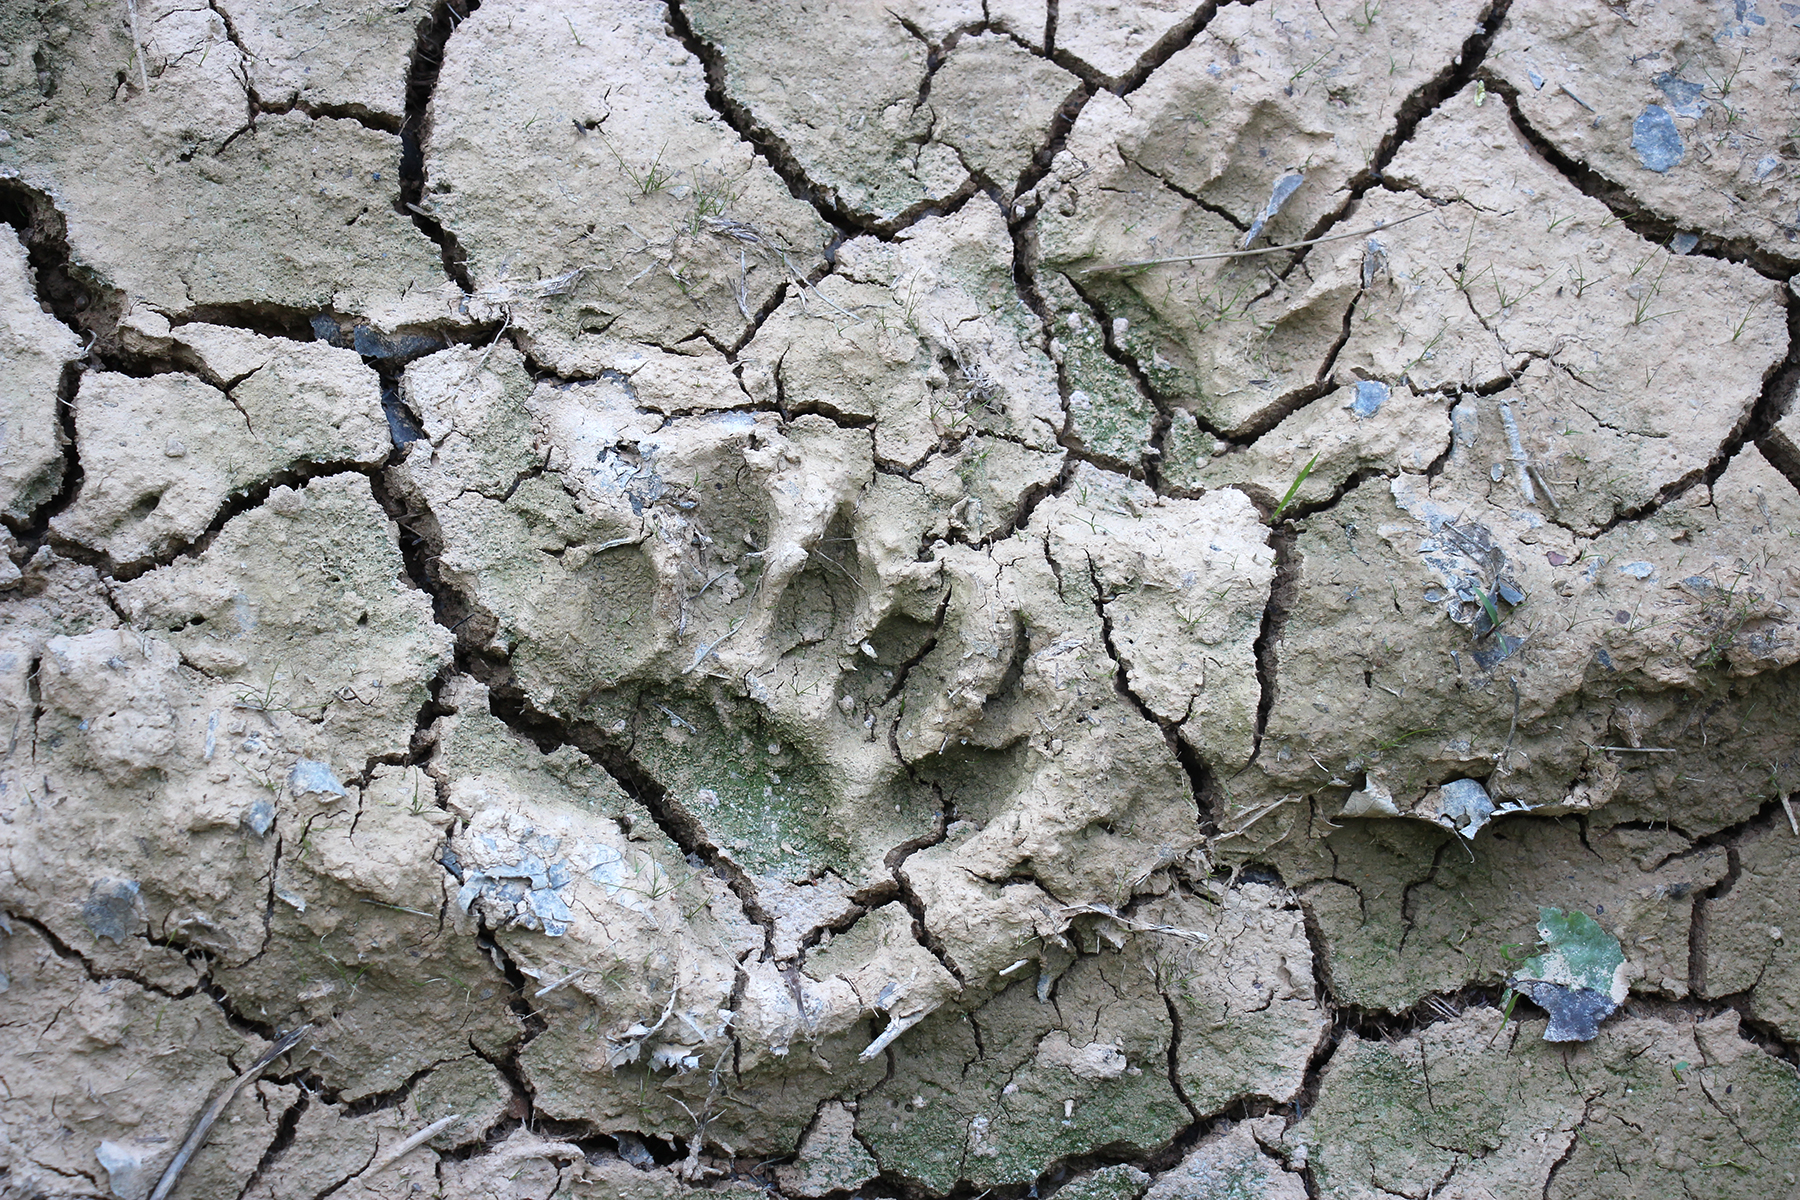 bear-tracks-in-dried-mud